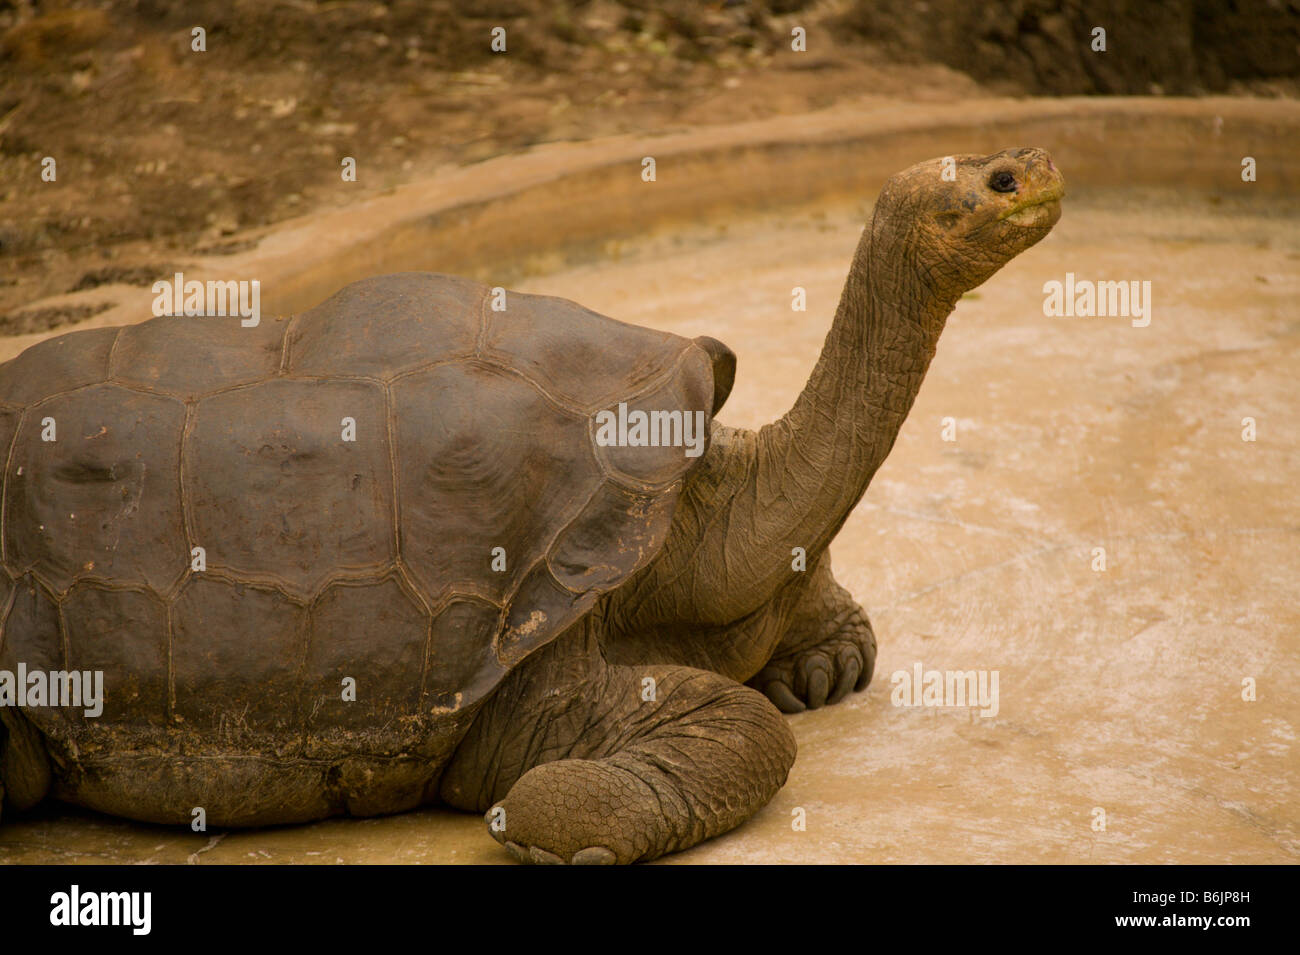 Ecuador, Santa Cruz Island, Galapagos Islands National Park, Lonesome George-Giant Tortoise from Pinta Island Stock Photo